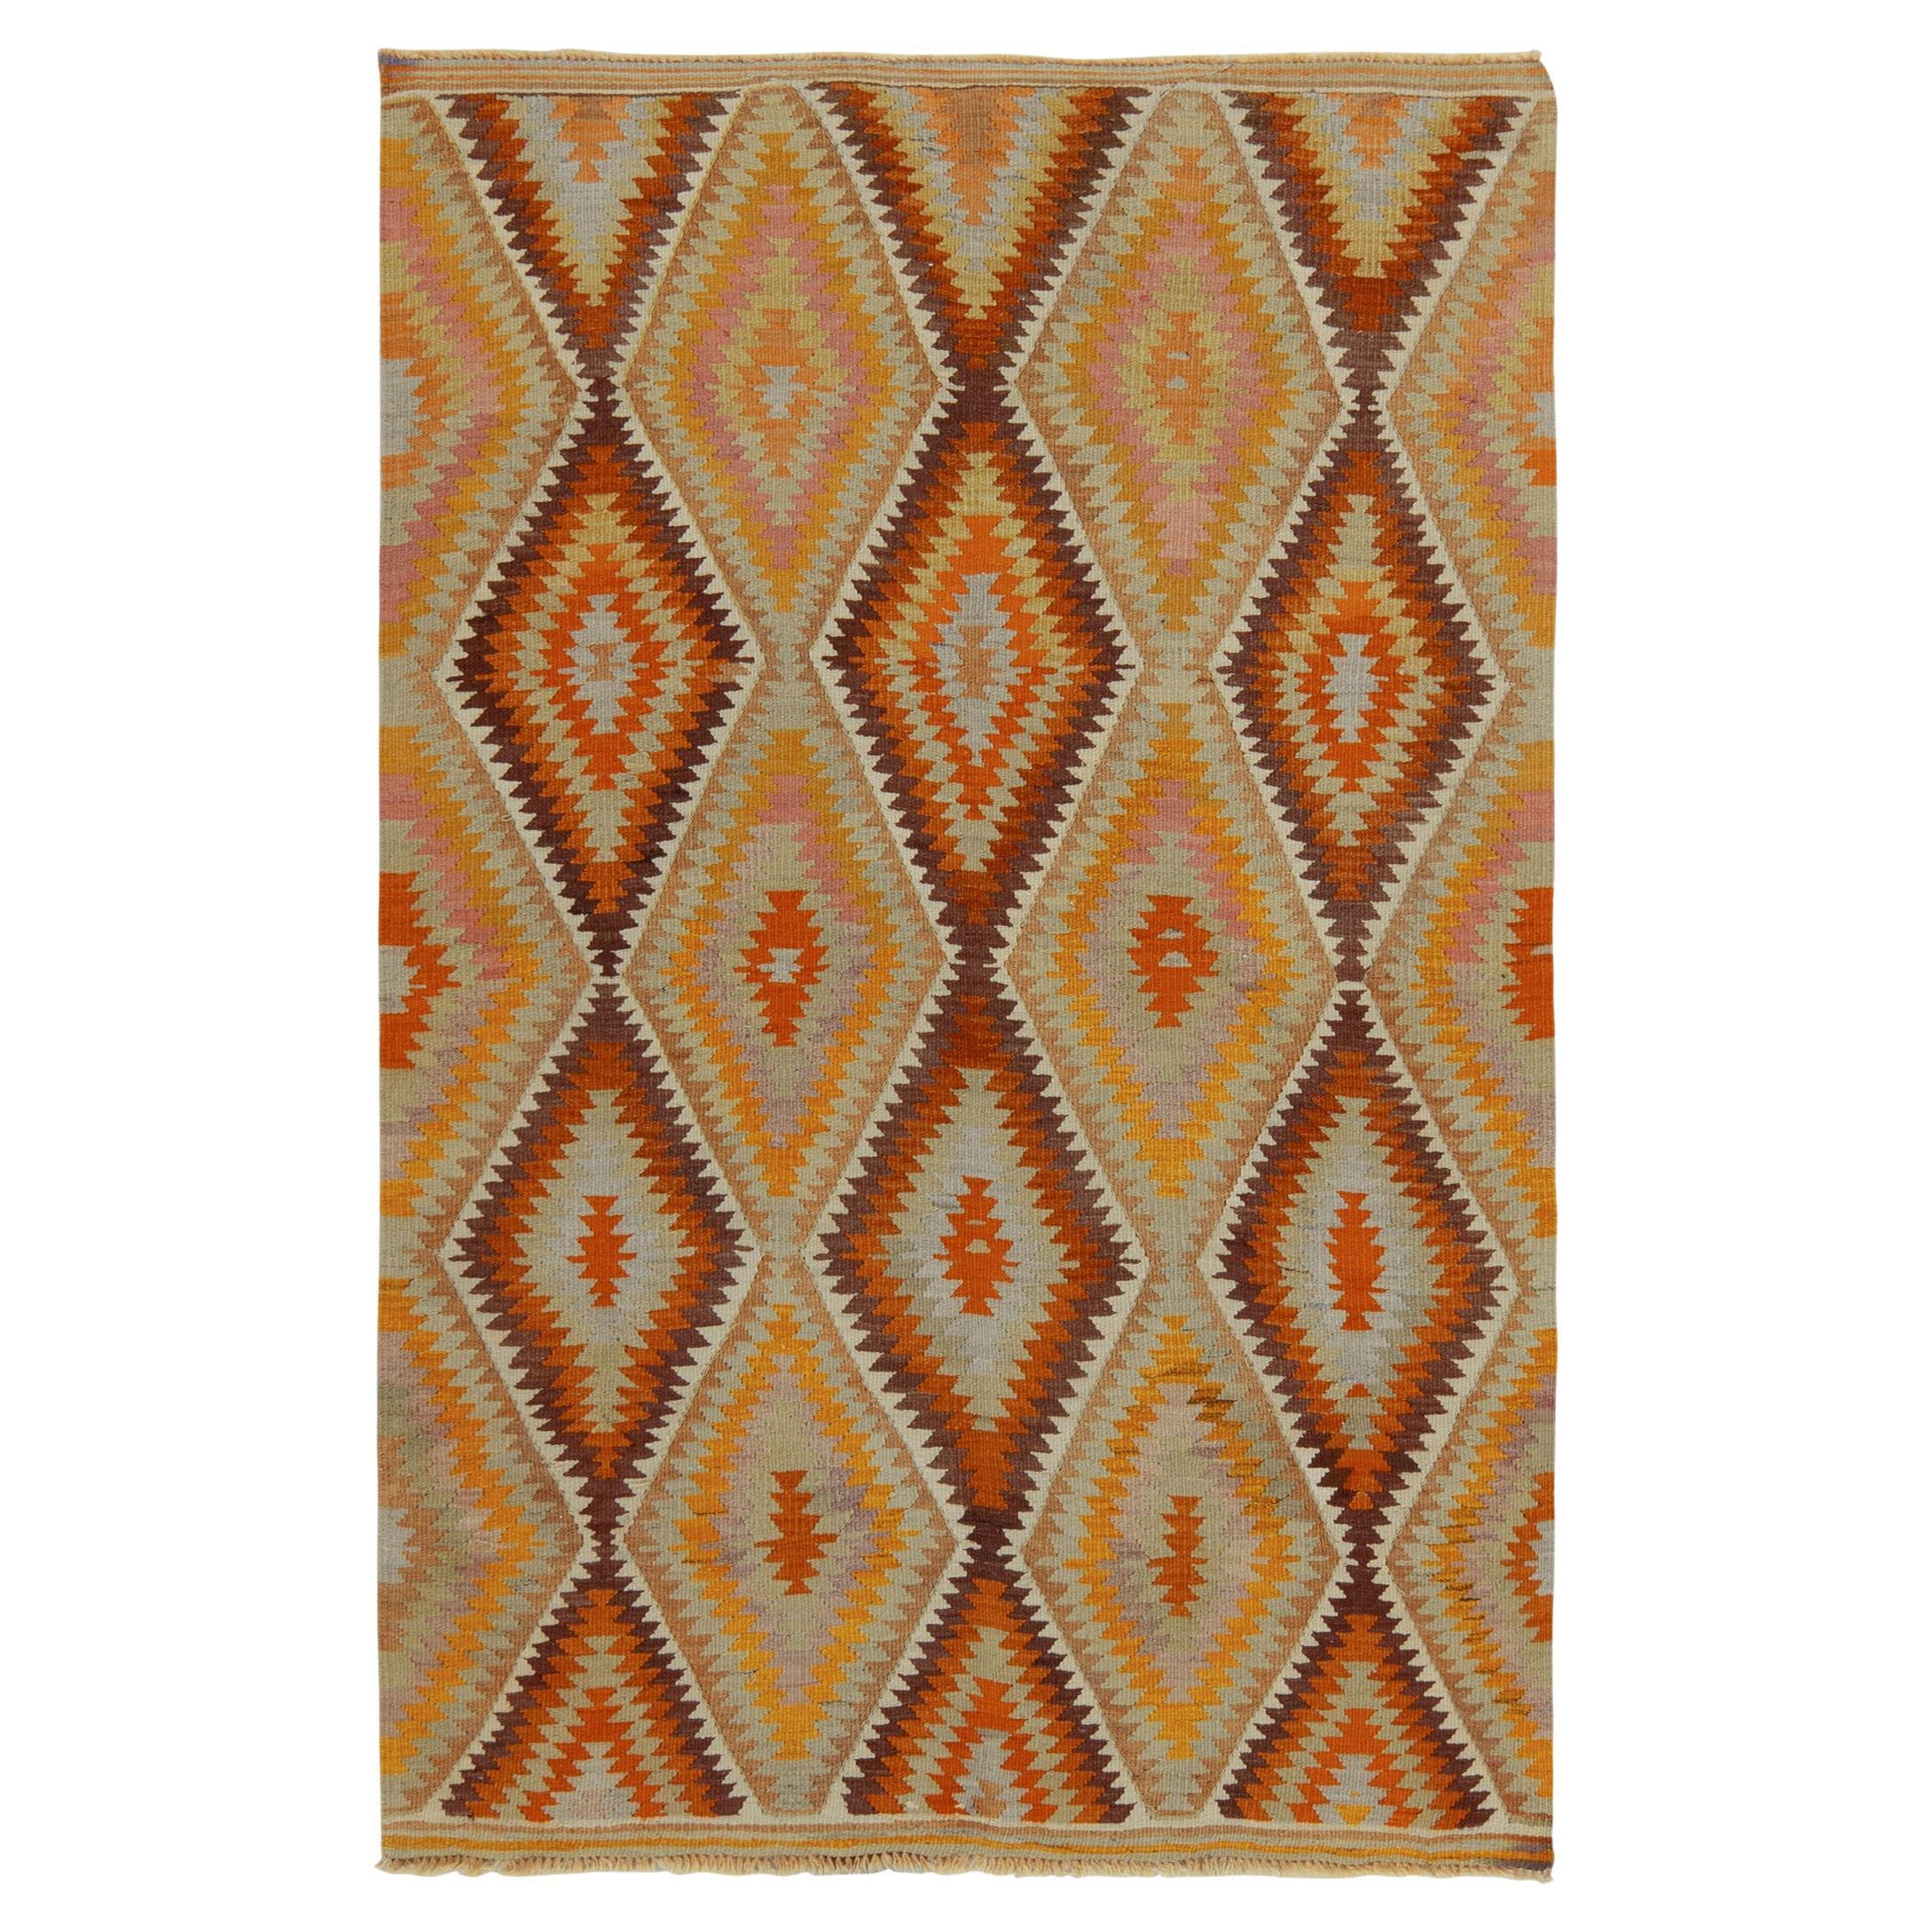 1950s Vintage Turkish Kilim rug in Orange, Gold Geometric Pattern by Rug & Kilim